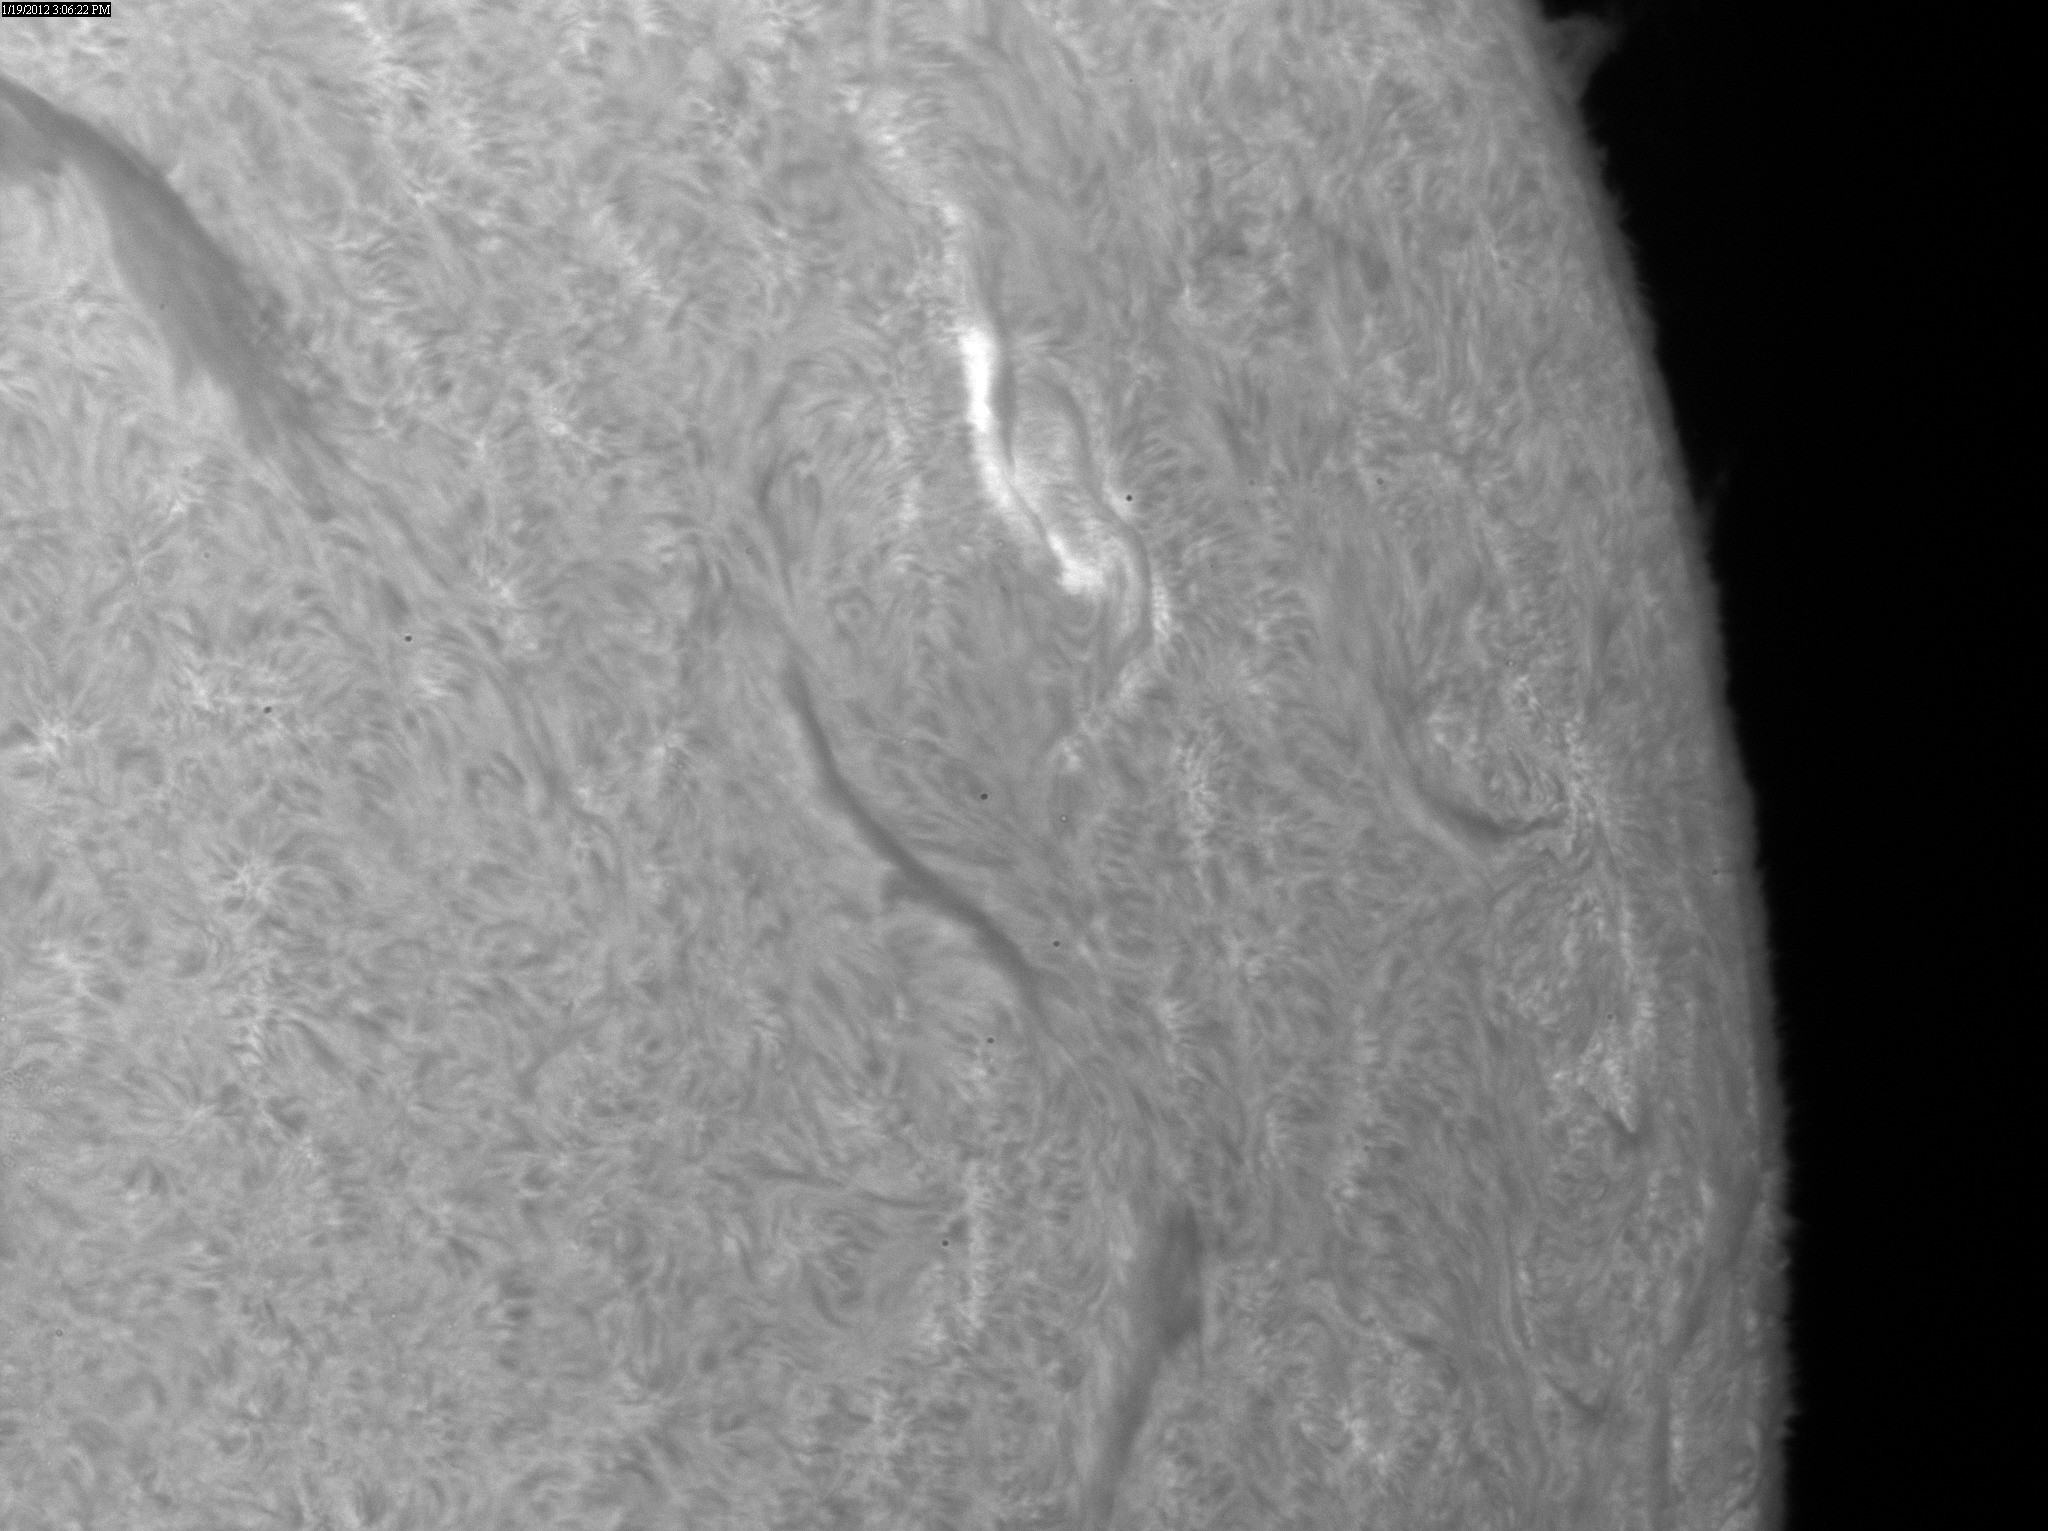 2012 Jan 19- Sun- surface feature